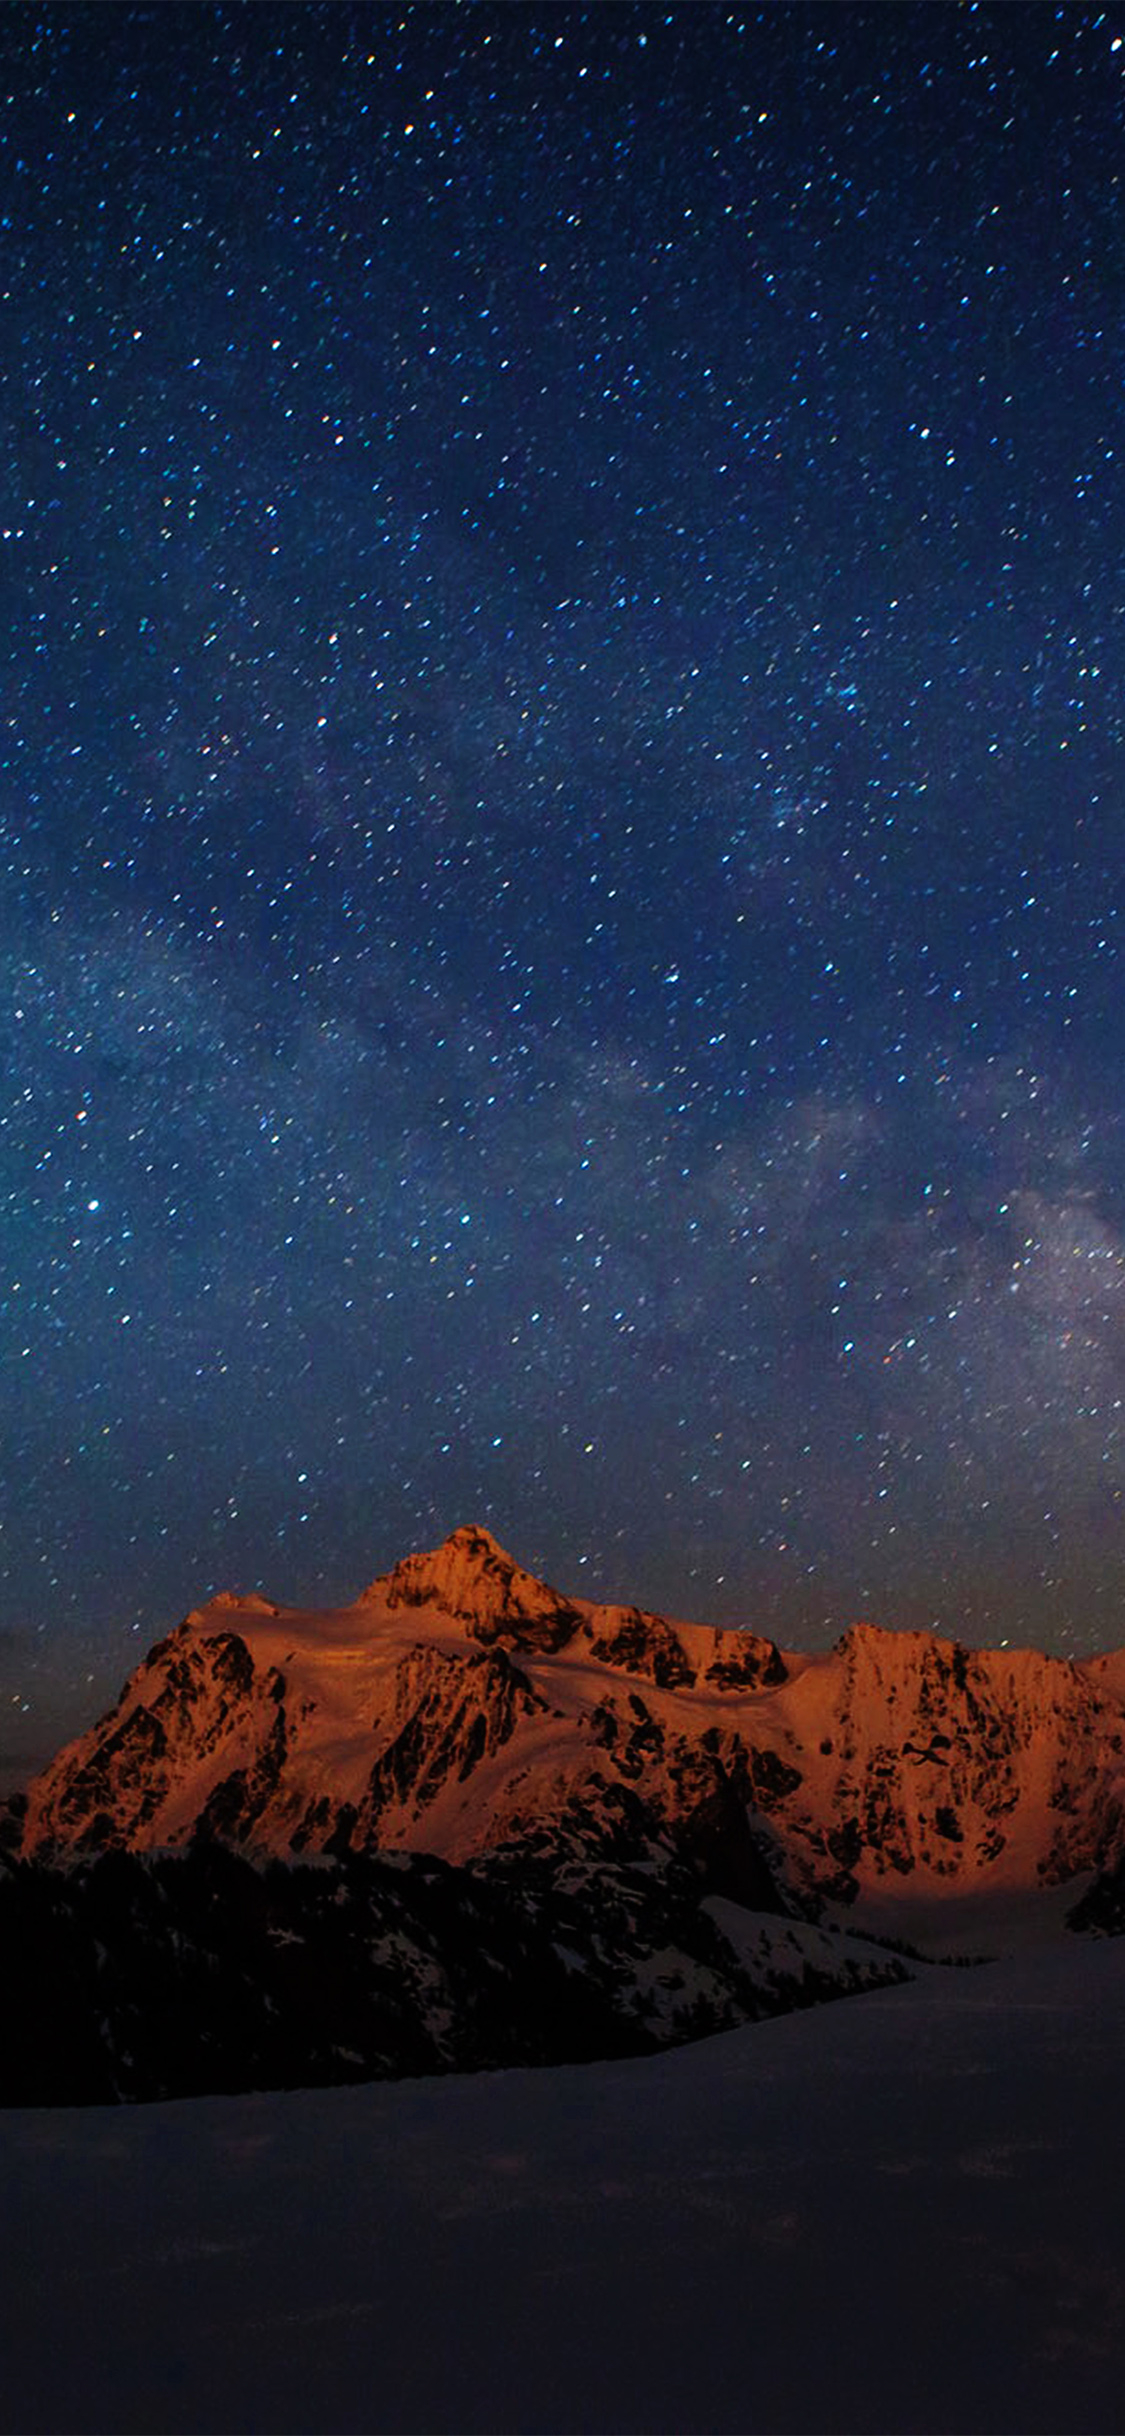 1125x2436 | iPhone11 wallpaper | nf70-starry-night-skymountain-nature